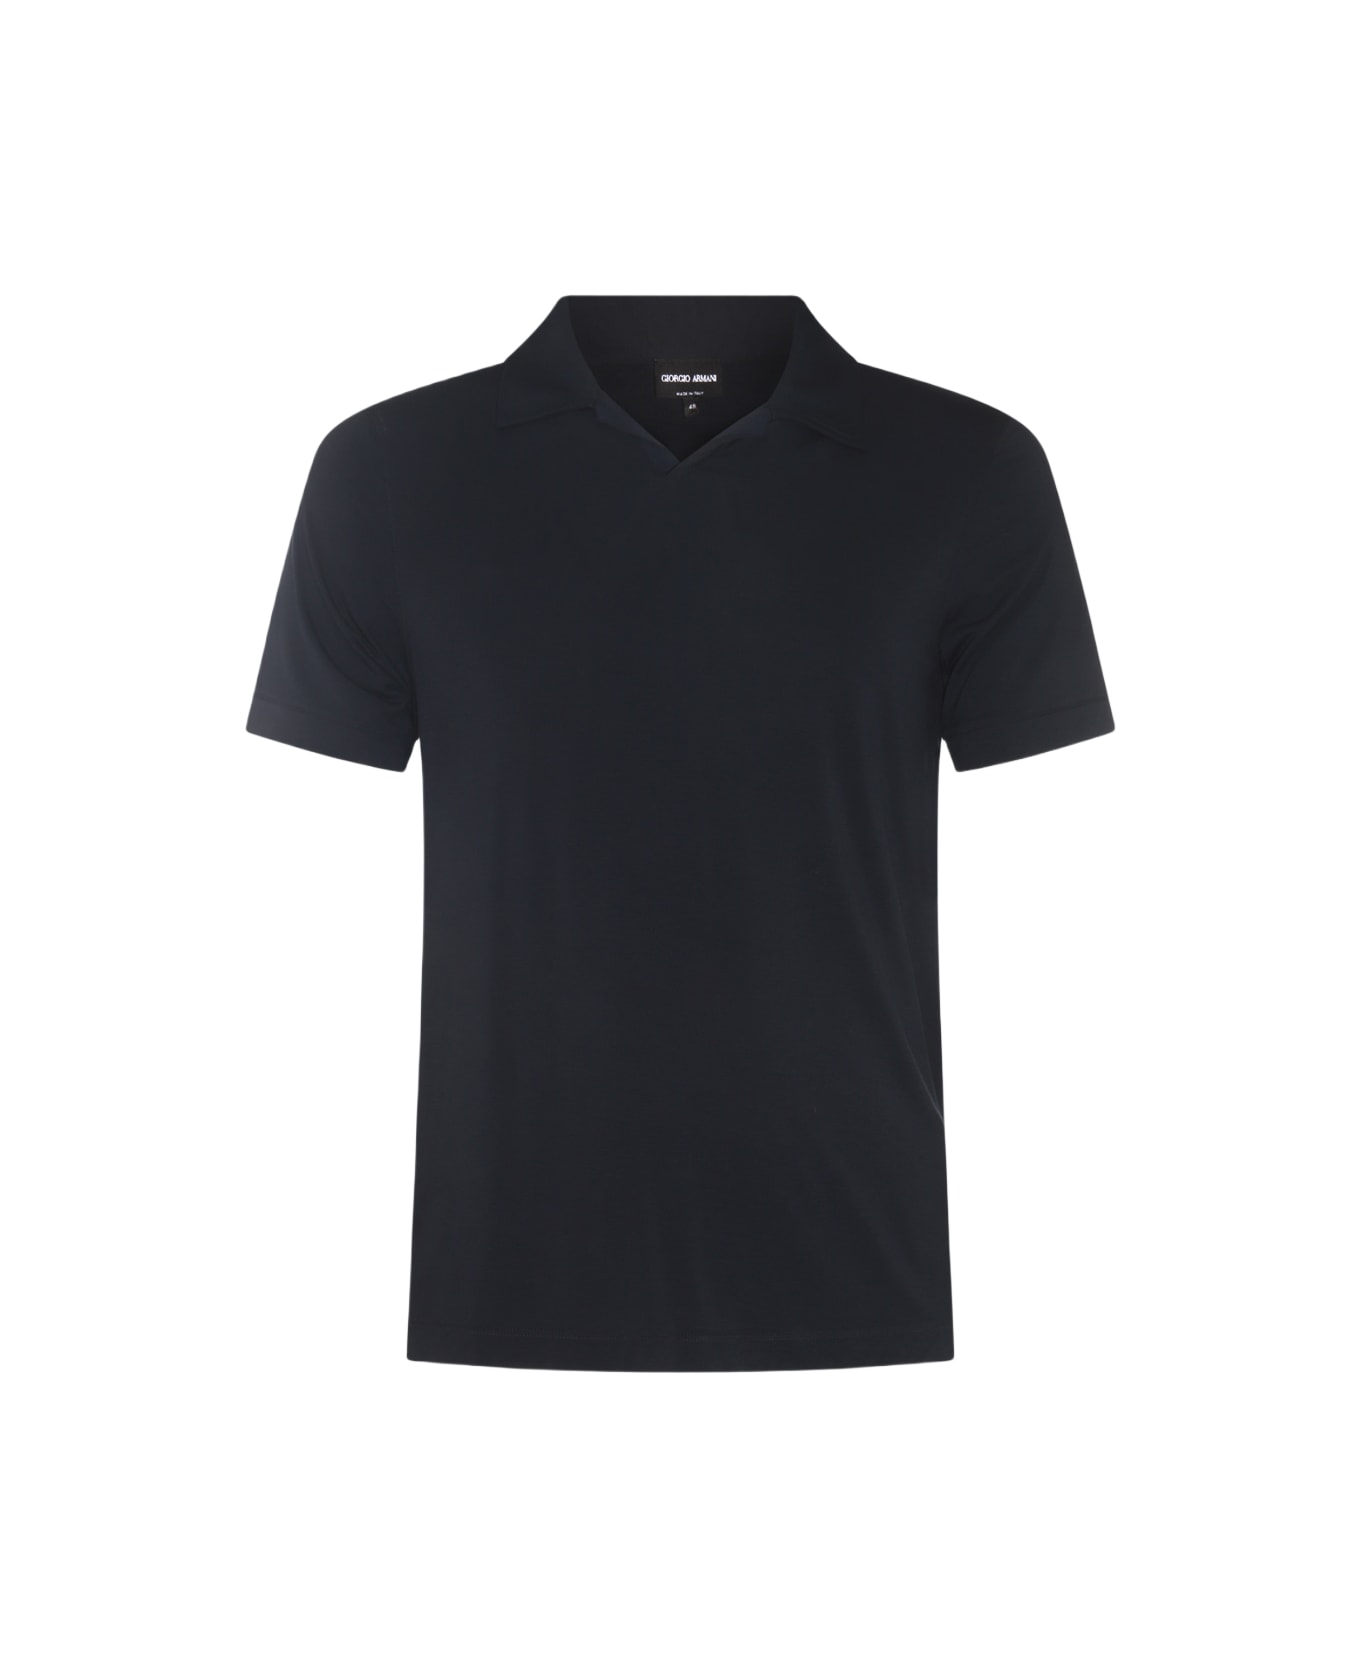 Giorgio Armani Black Polo Shirt